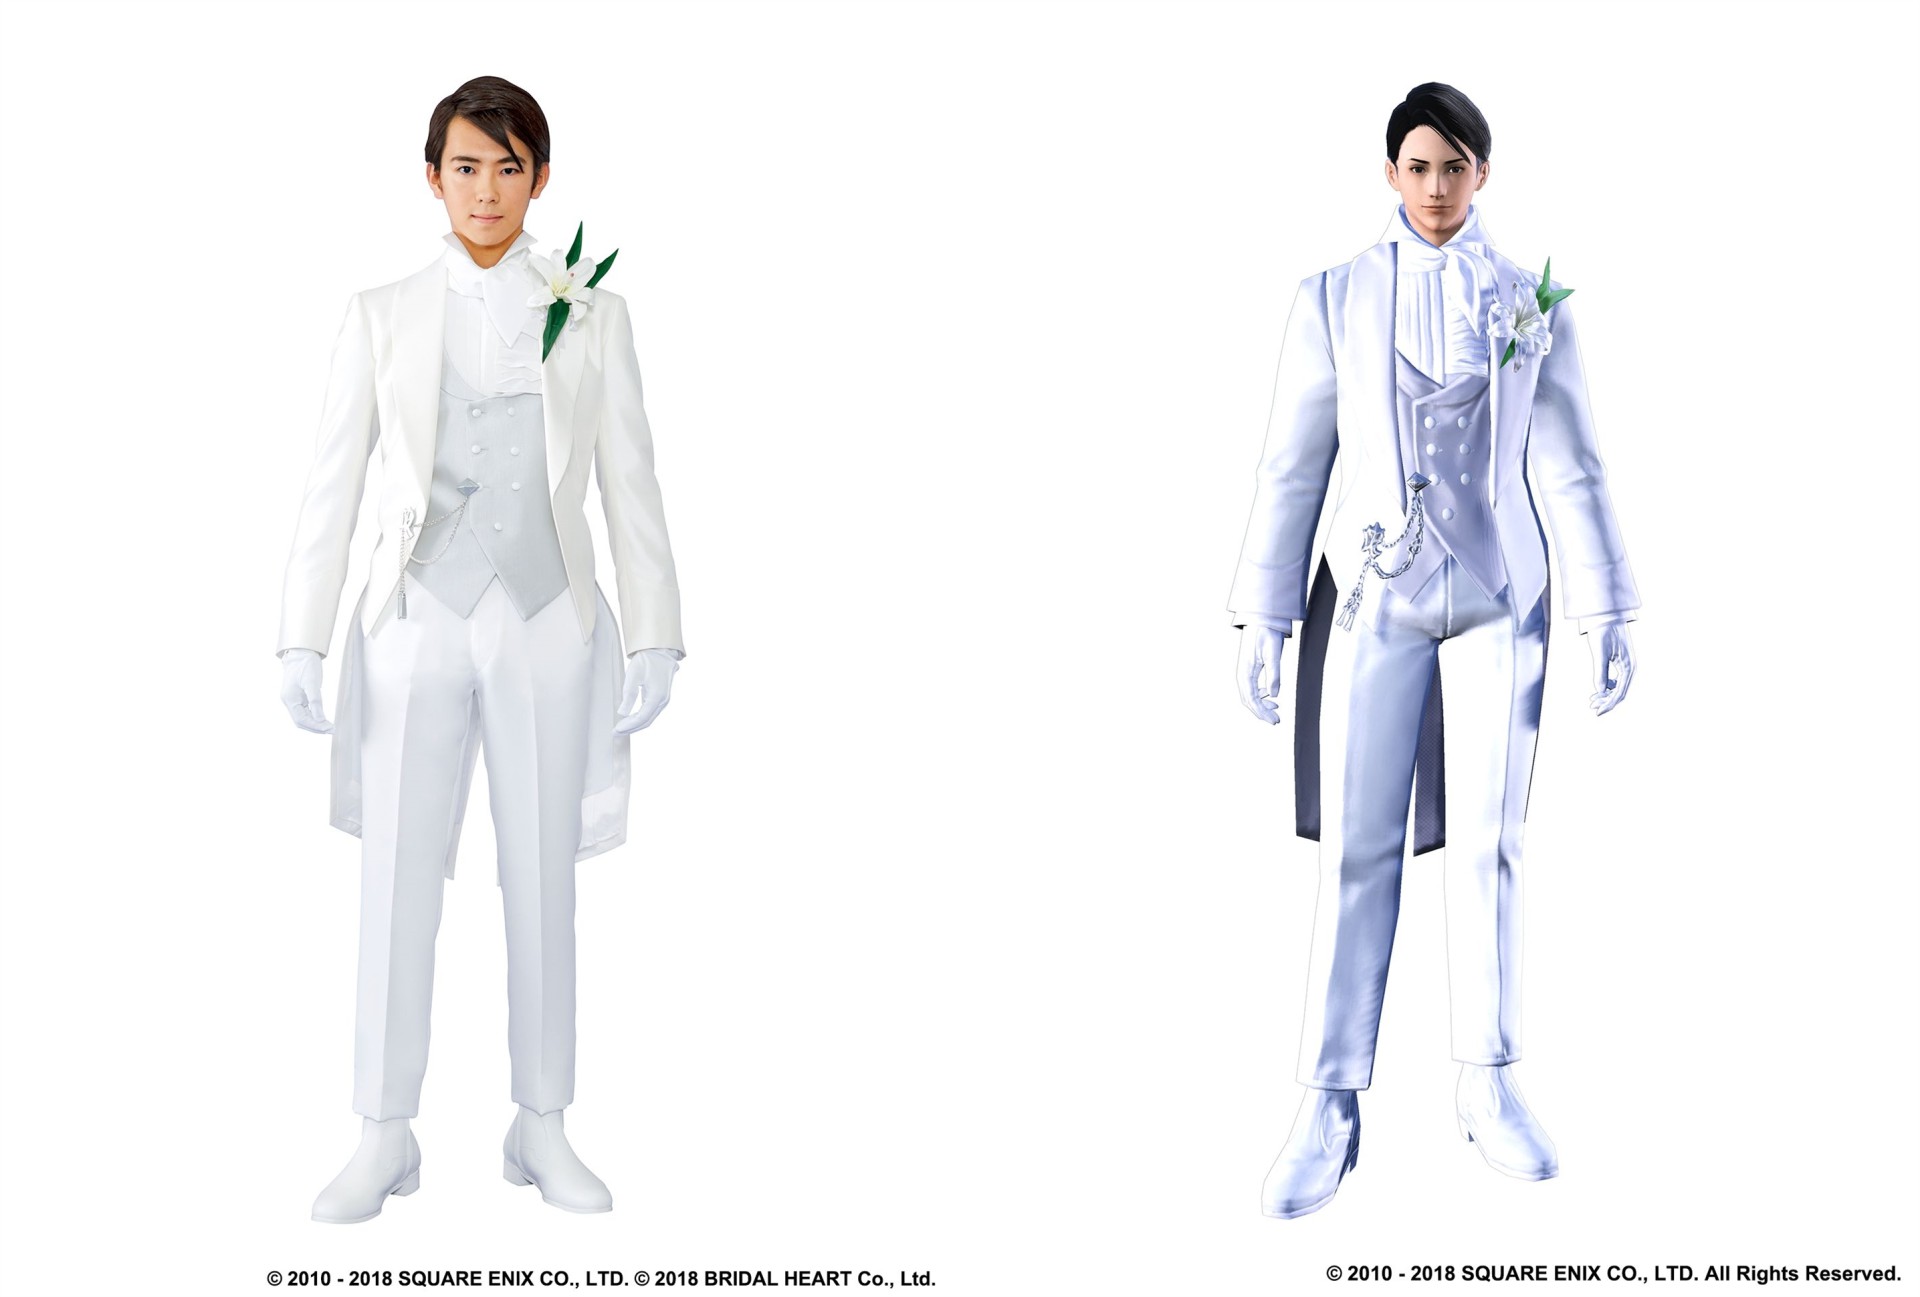 SE将推出《最终幻想14》主题婚礼 为新人留下浪漫回忆